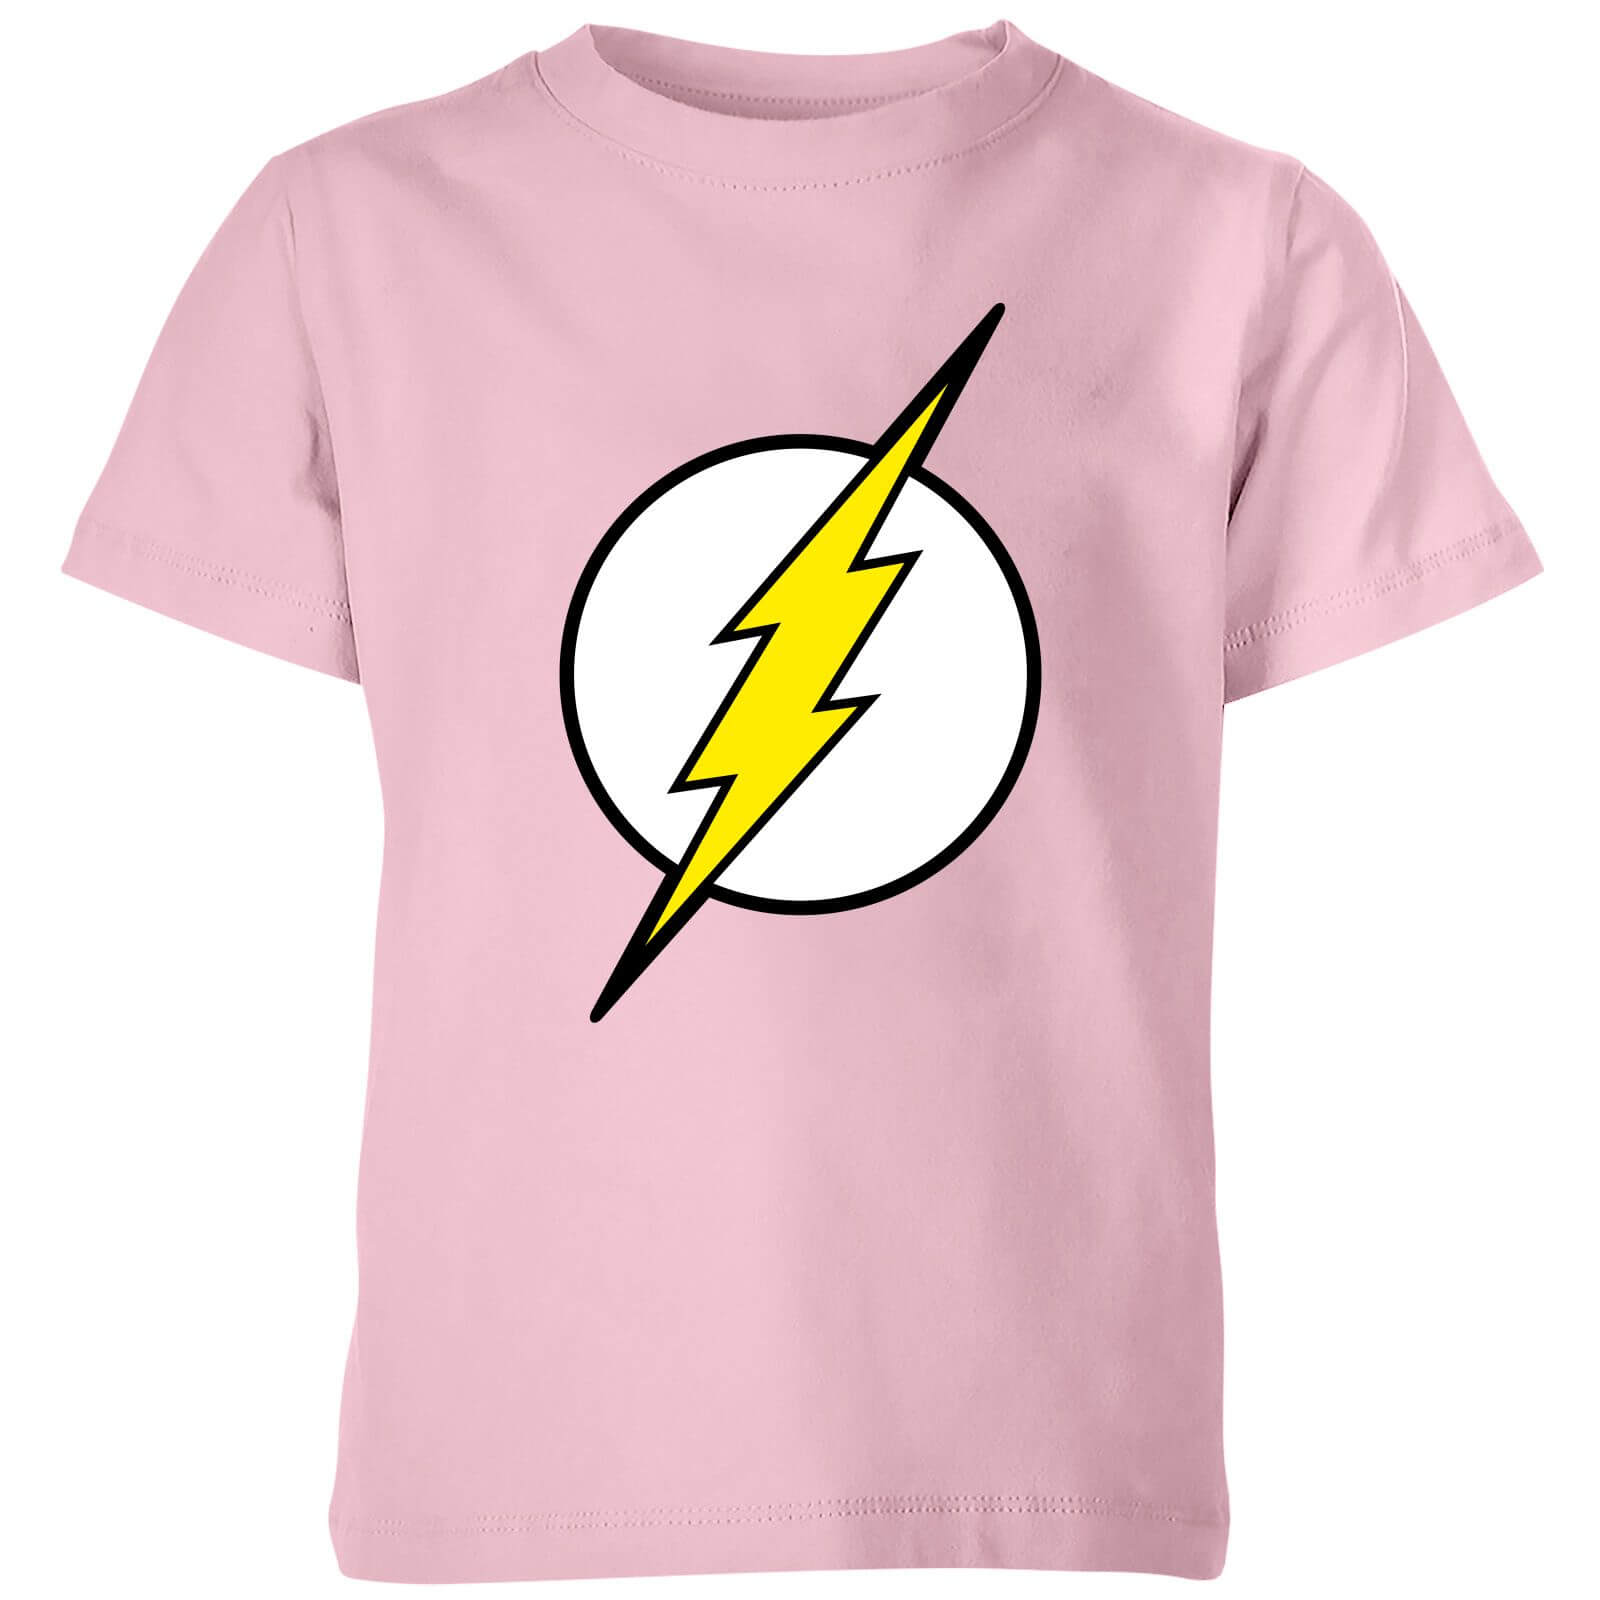 Justice League Flash Logo Kids' T-Shirt - Baby Pink - 7-8 Jahre von Justice League